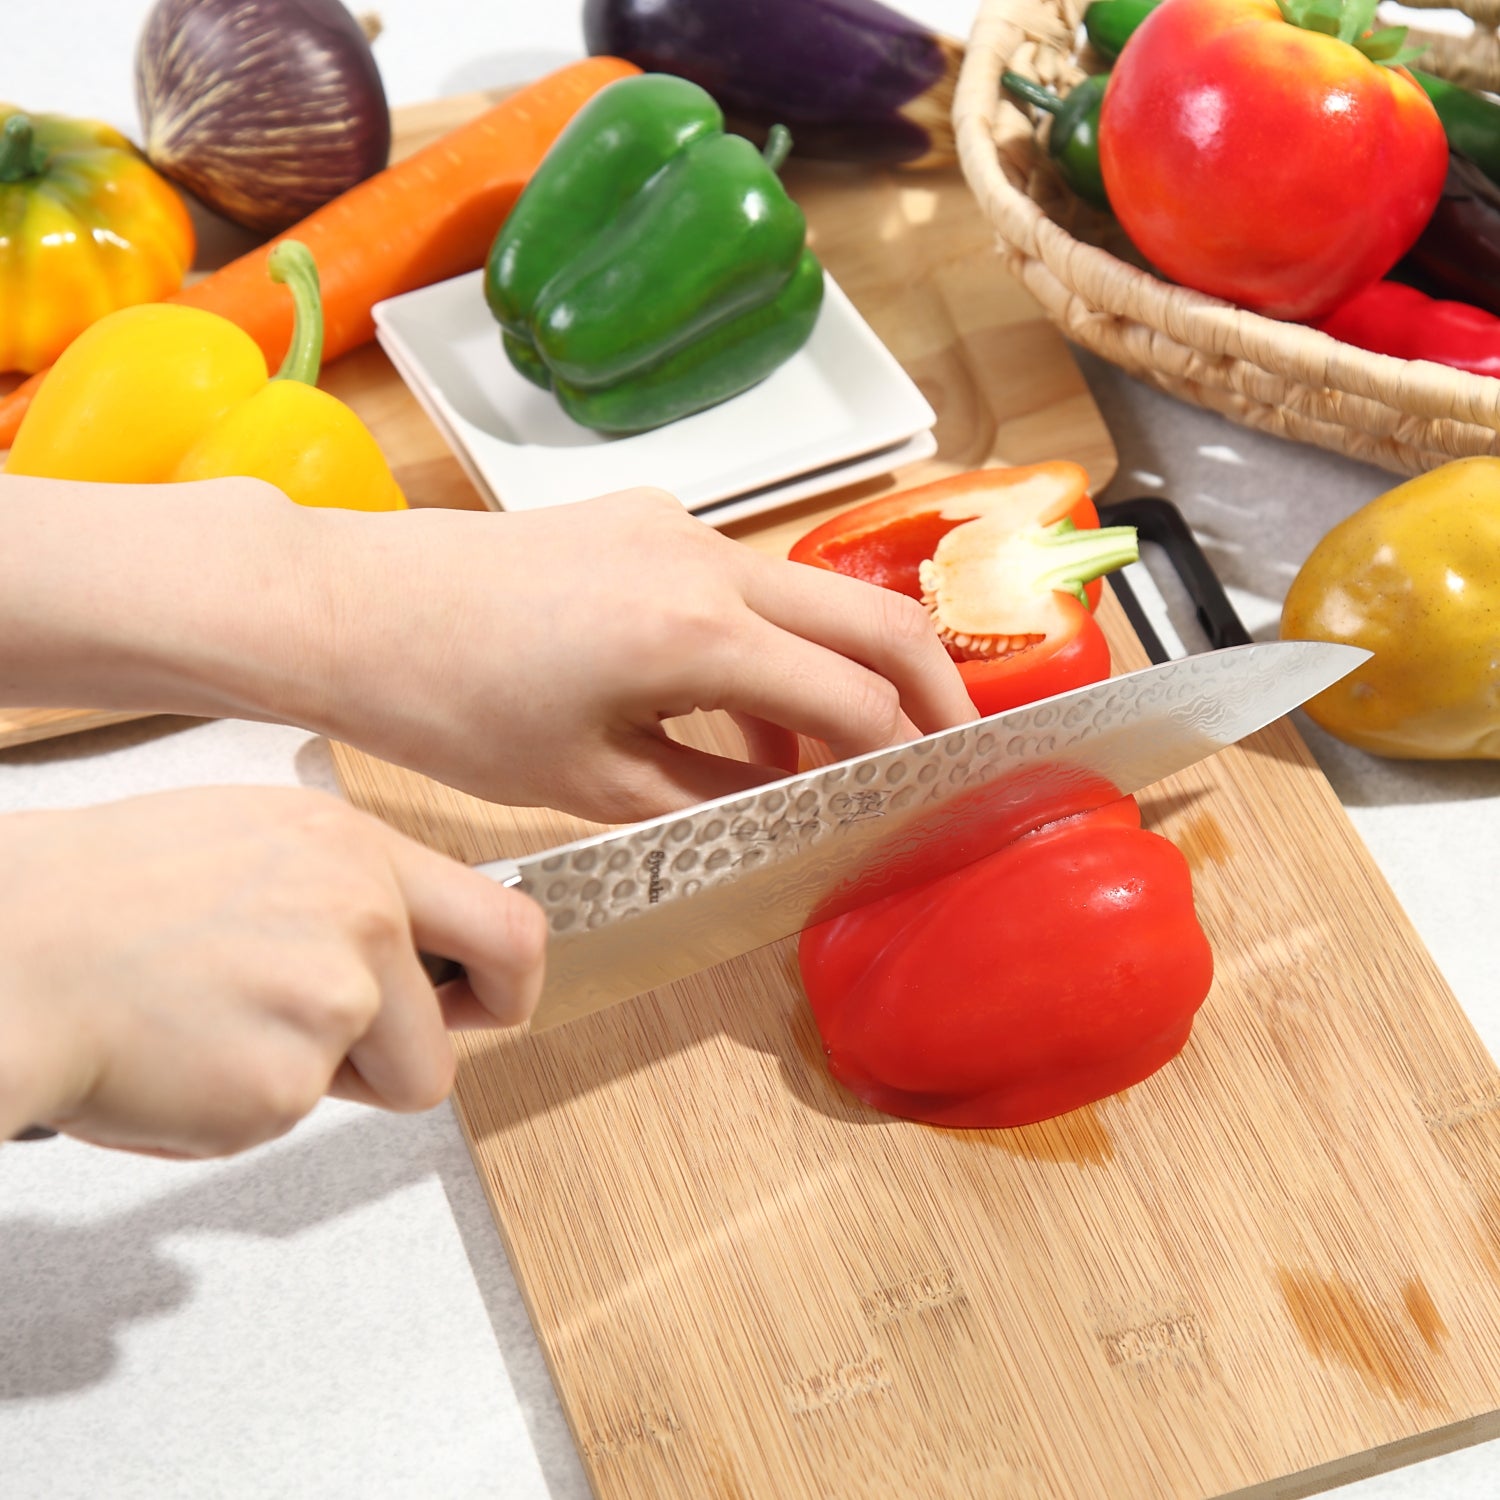 Syosaku Japanese Best Sharp Kitchen Chef Knife Hammered Damascus VG-10 16 Layer Mahogany Handle, Gyuto 8.3-inch (210mm)